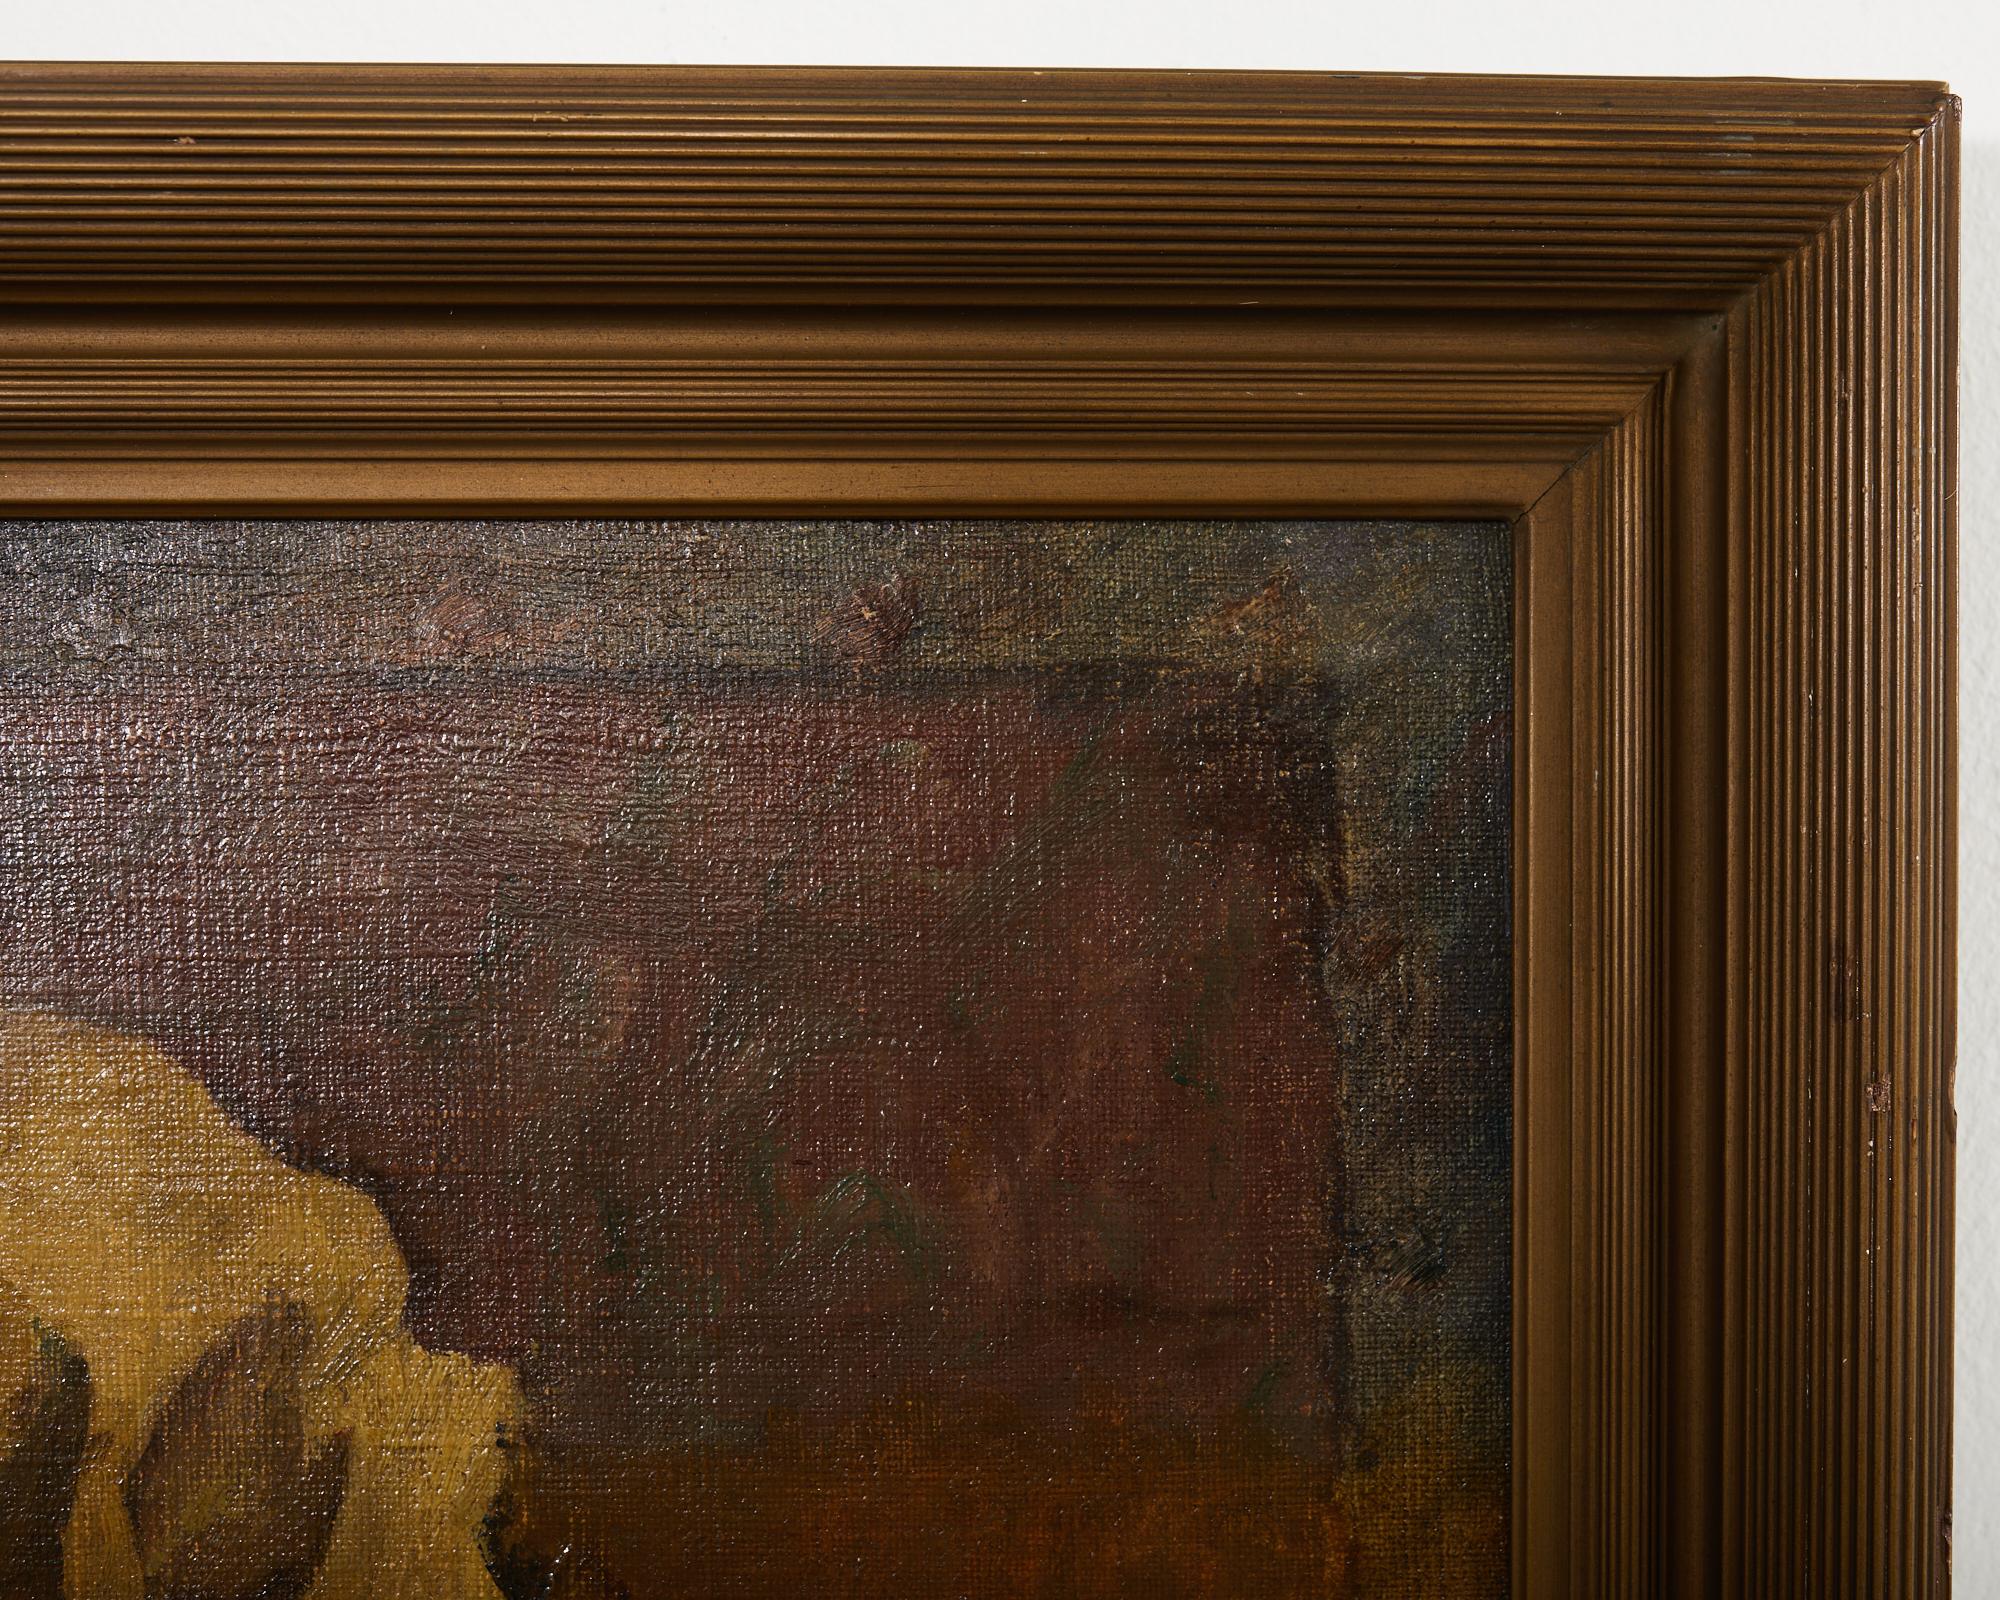 20th Century American School Memento Vanitas Still Life Canvas Painting For Sale